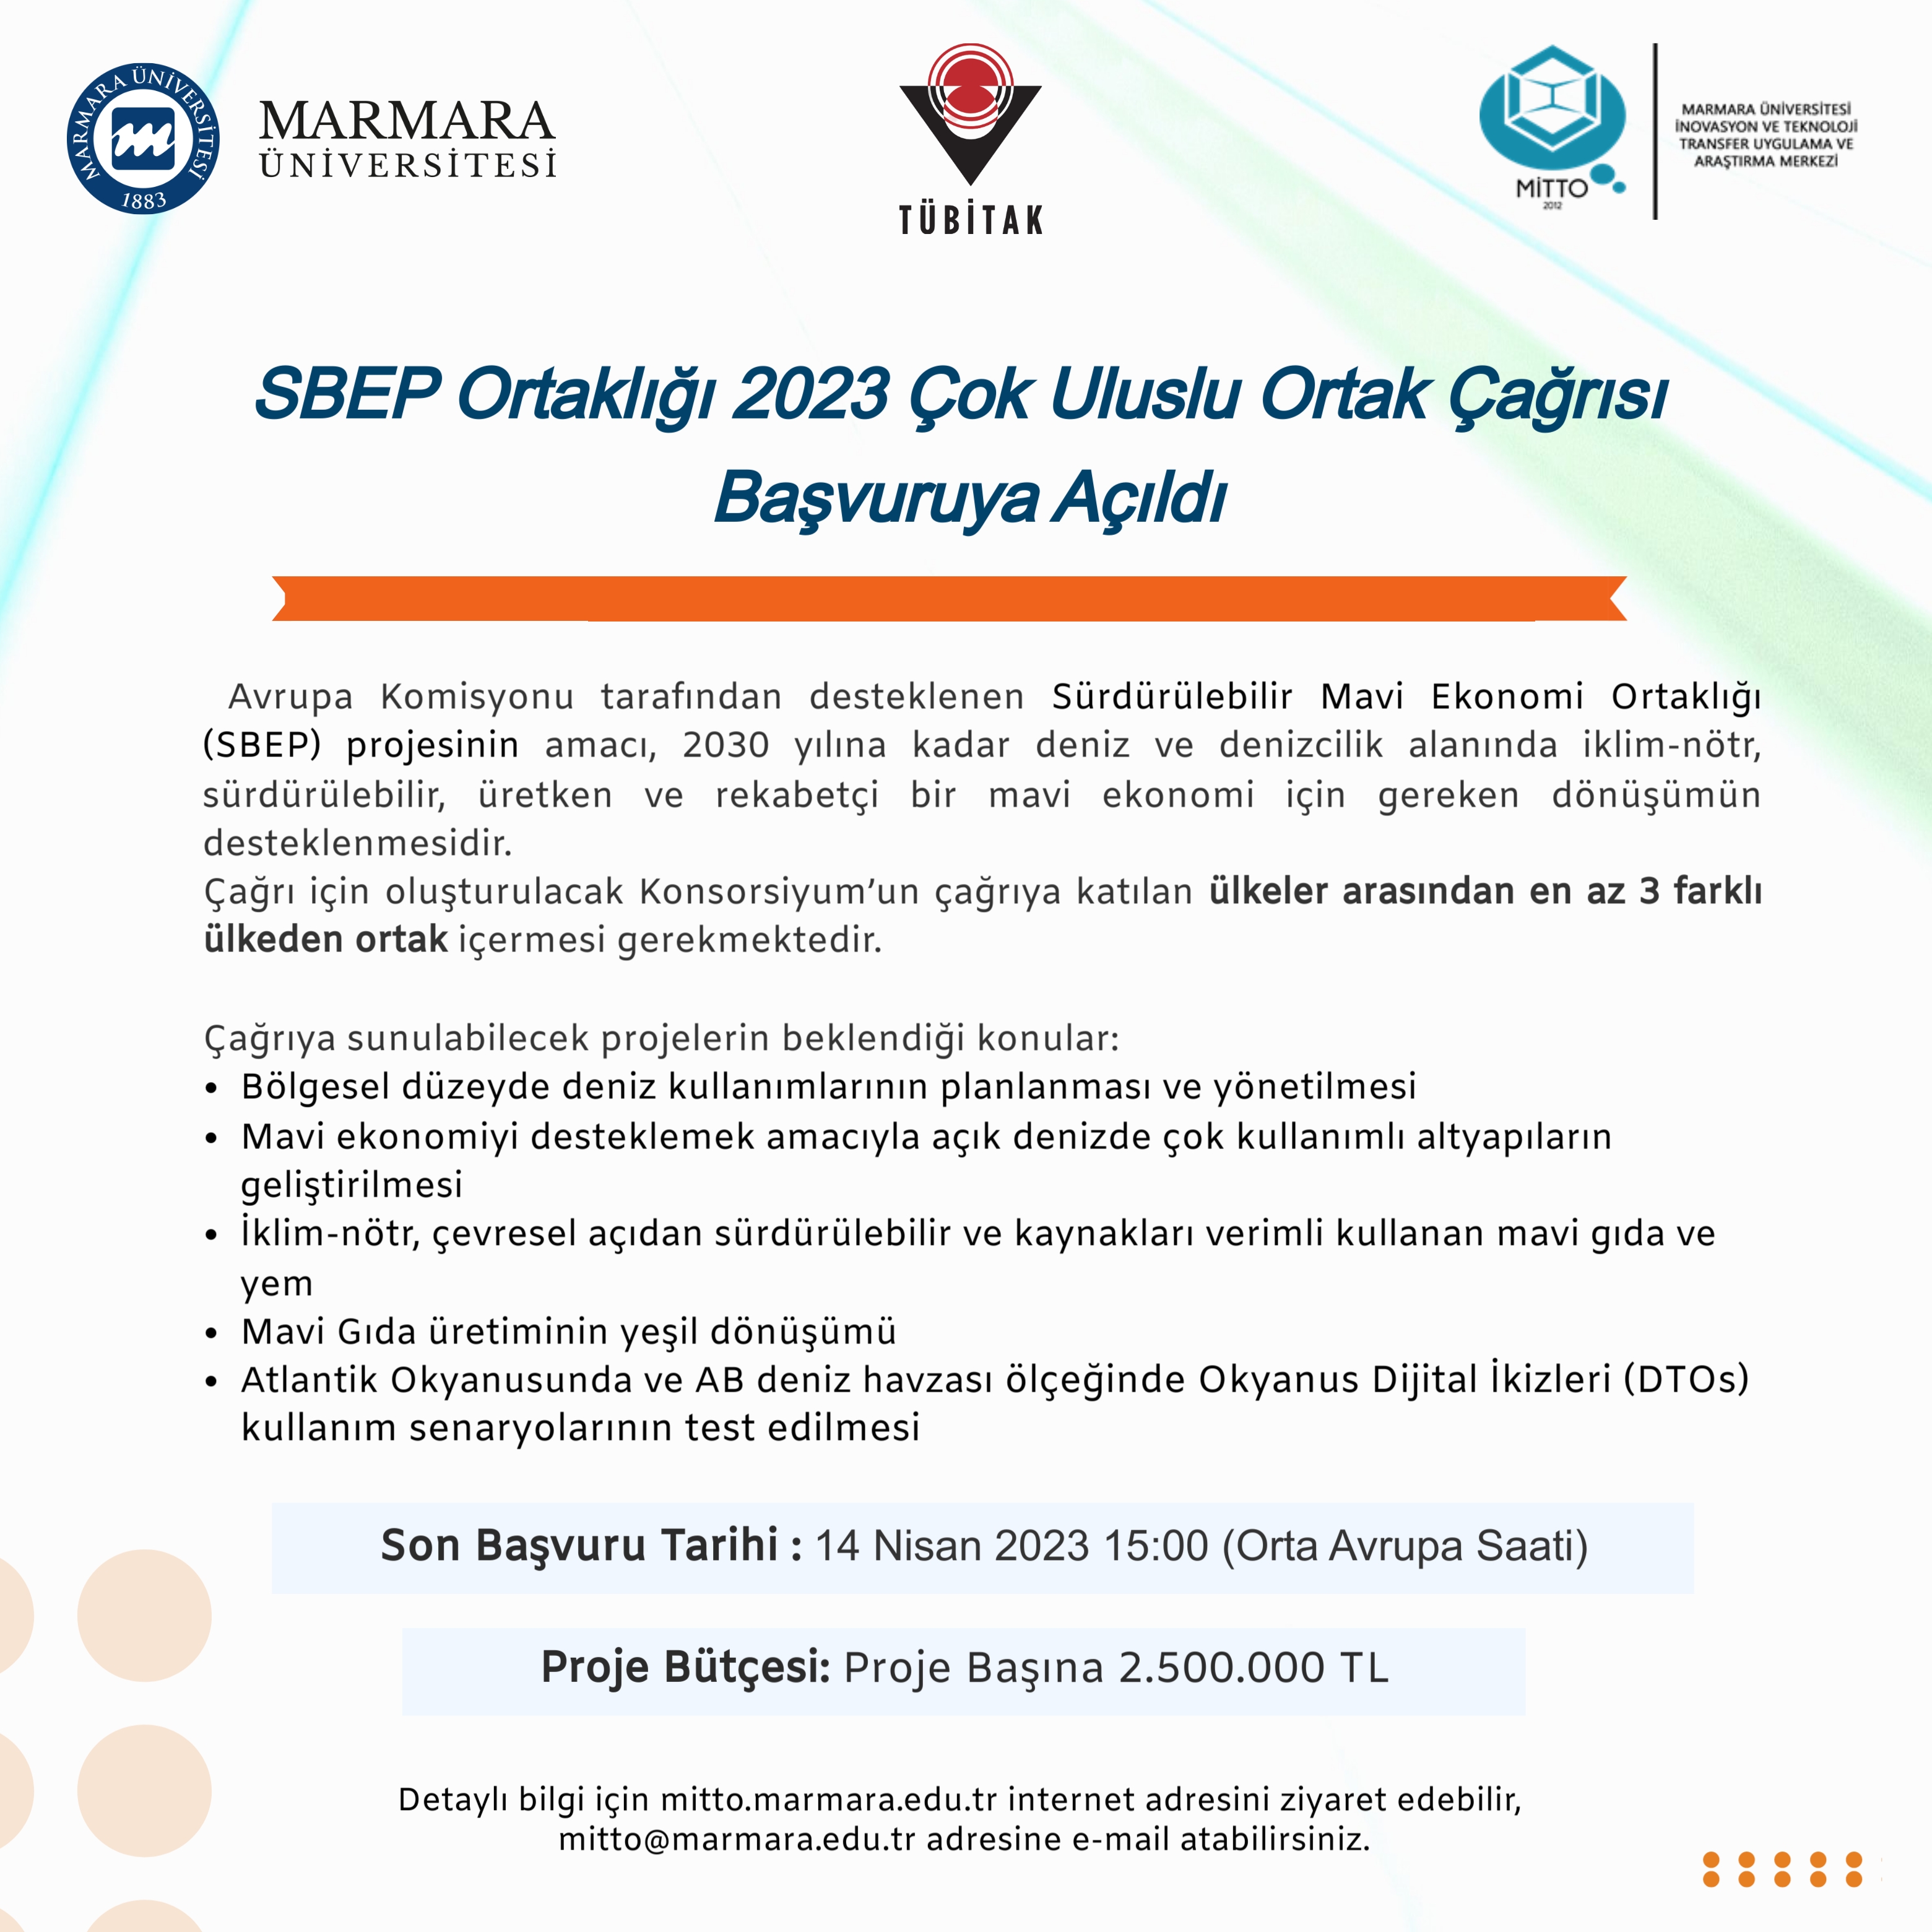 SBEP-Ortakl-2023.jpg (1.48 MB)